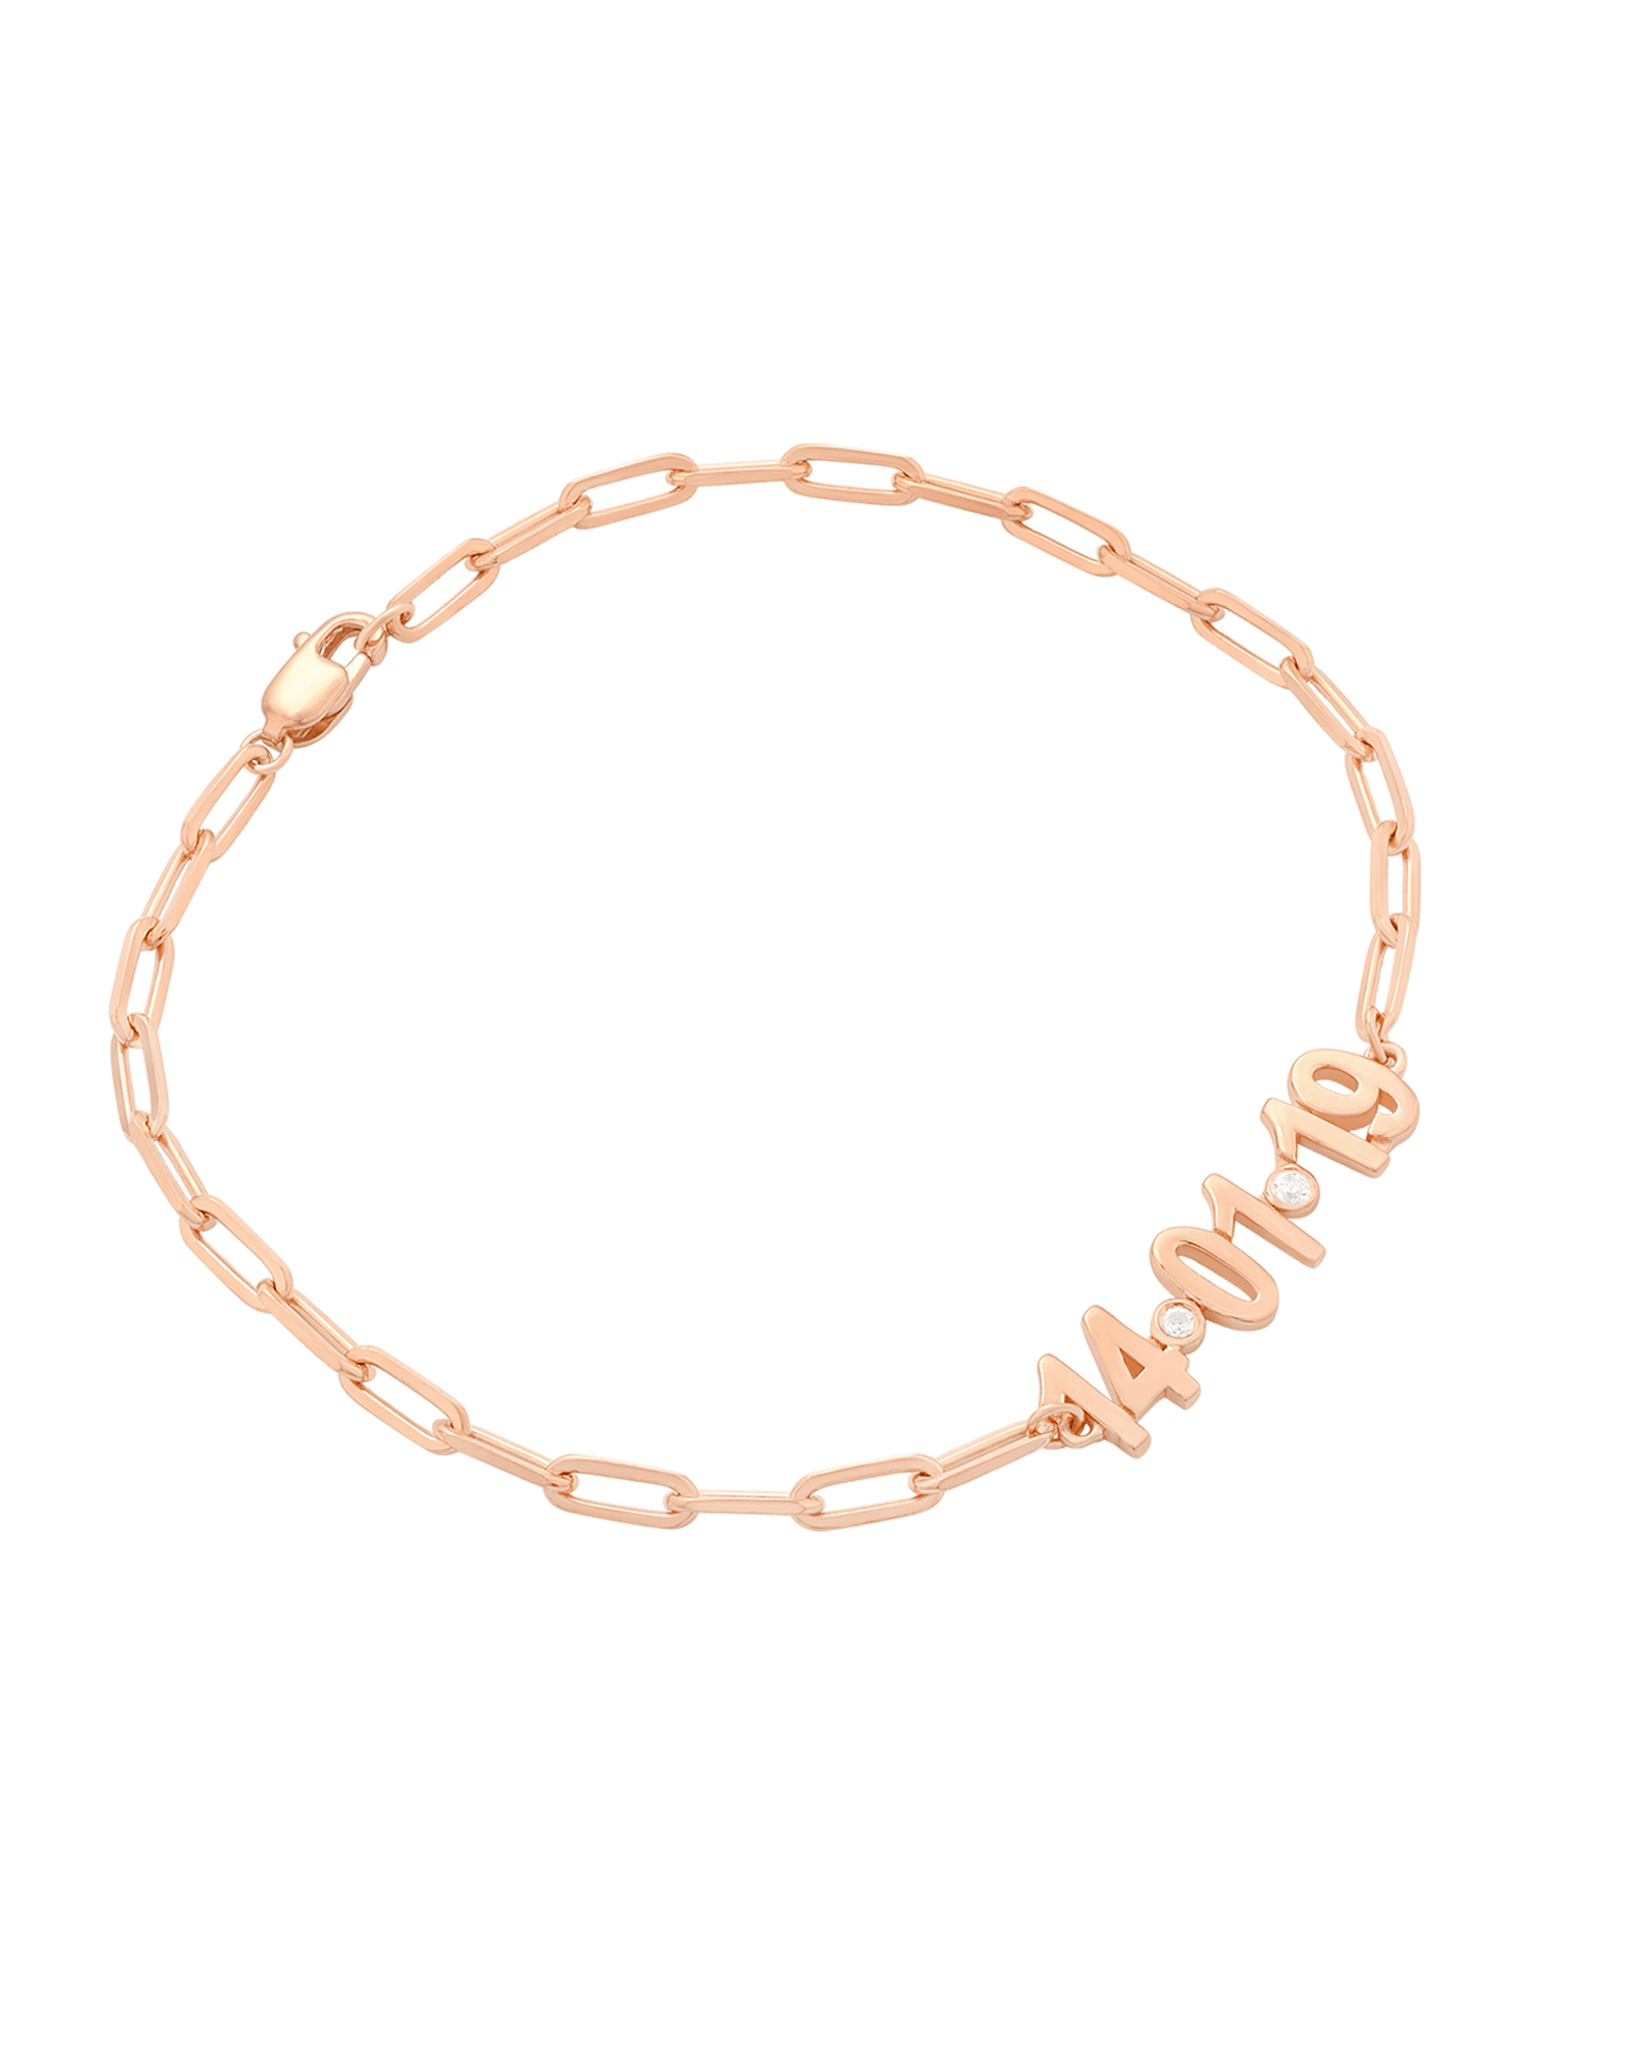 Birthdate Diamond Bracelet - 14K White Gold Bracelets magal-dev 